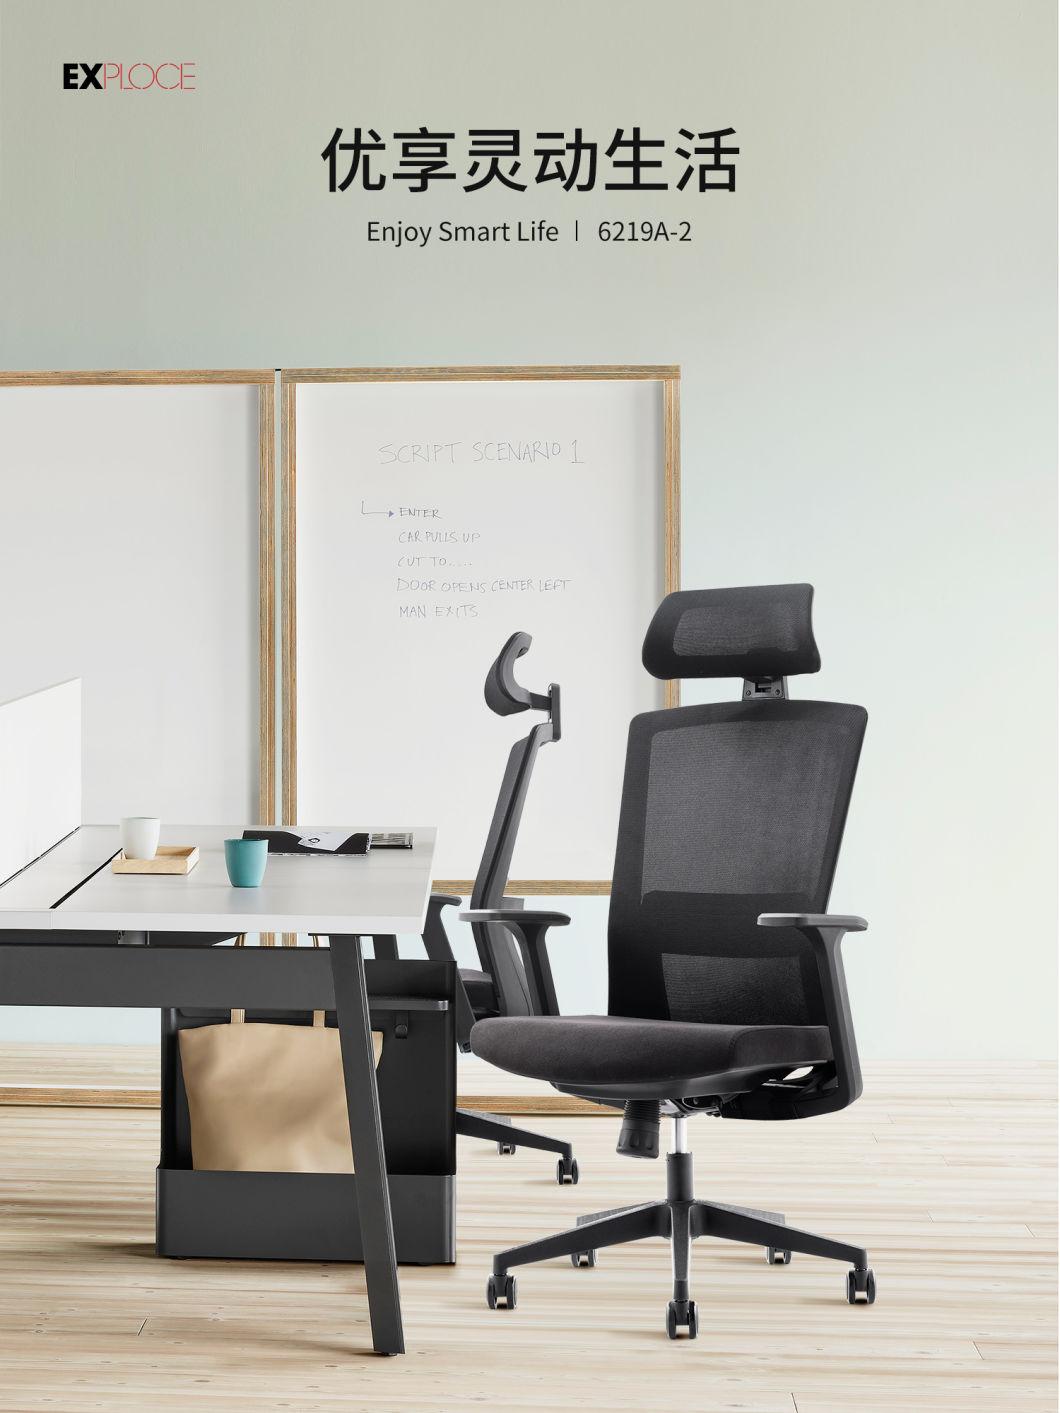 Manufacture BIFMA Foshan Ergonomic Wholesale Chairs Executive Mesh Plastic Chair Office Furniture